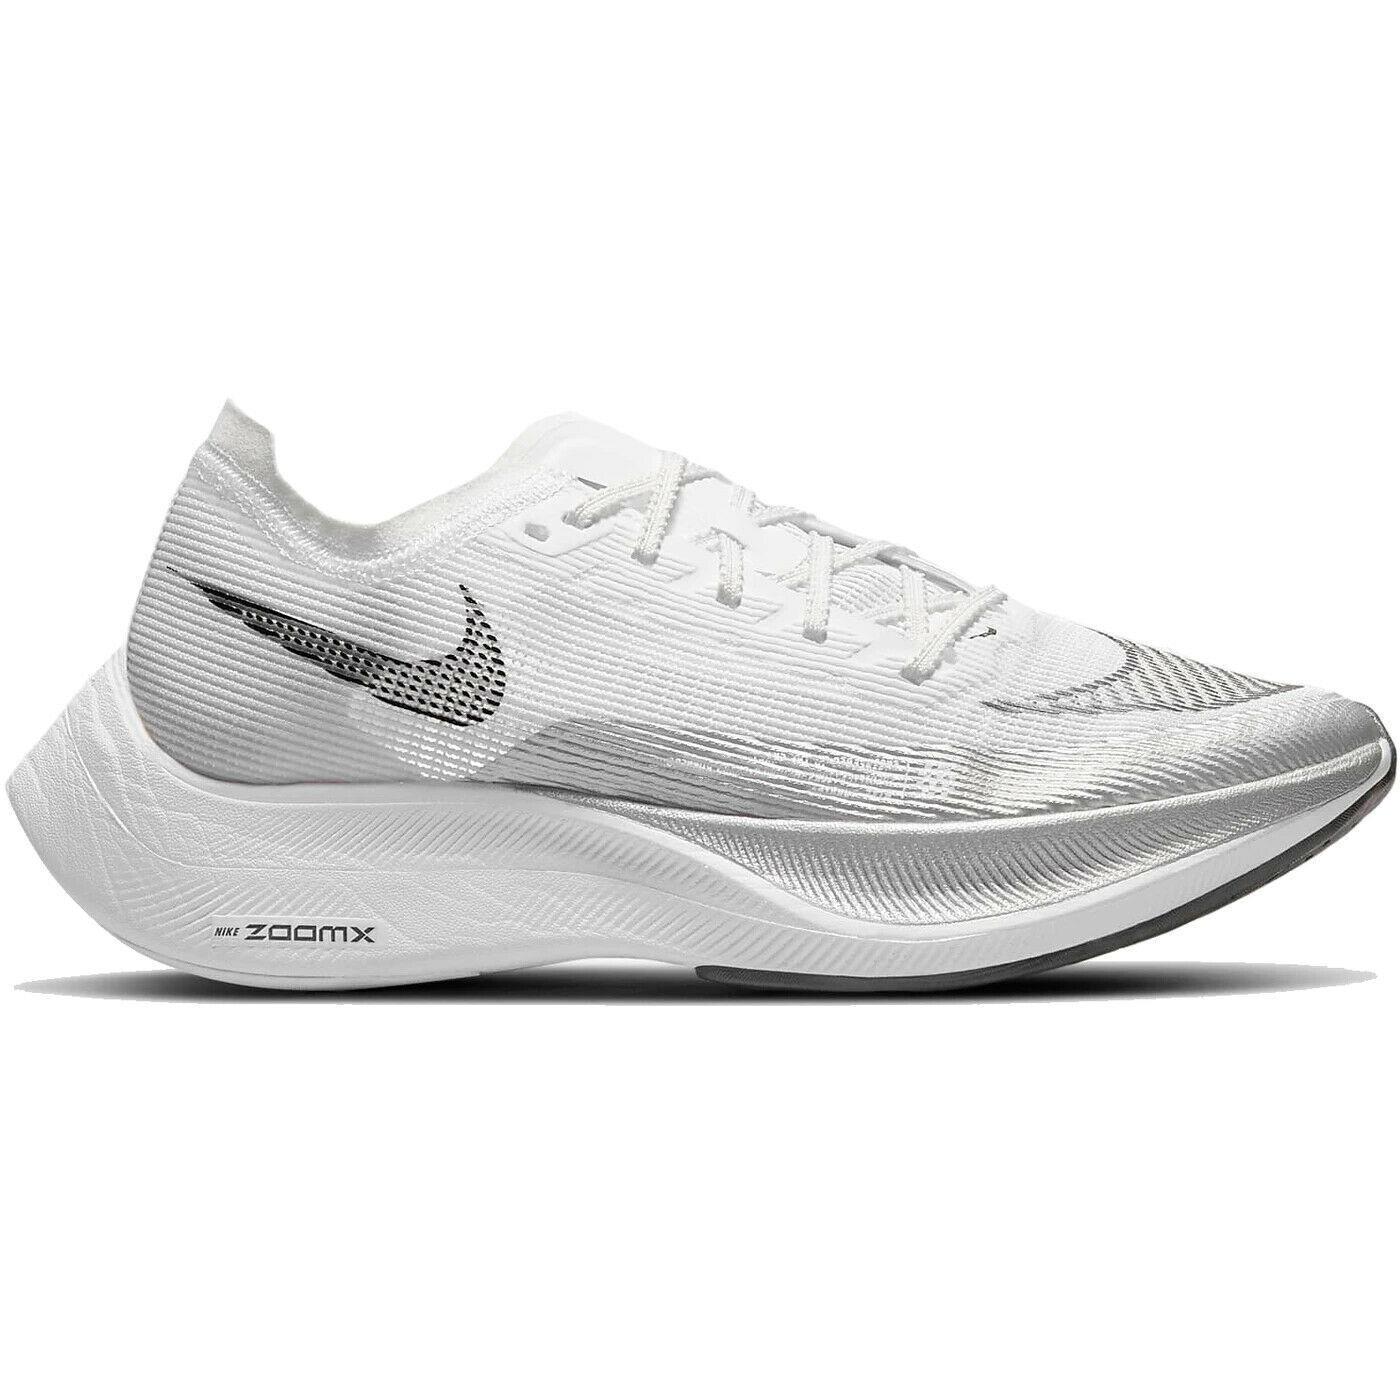 Nike Zoomx Vaporfly Next% 2 Running Shoes White CU4123 100 Women Retail